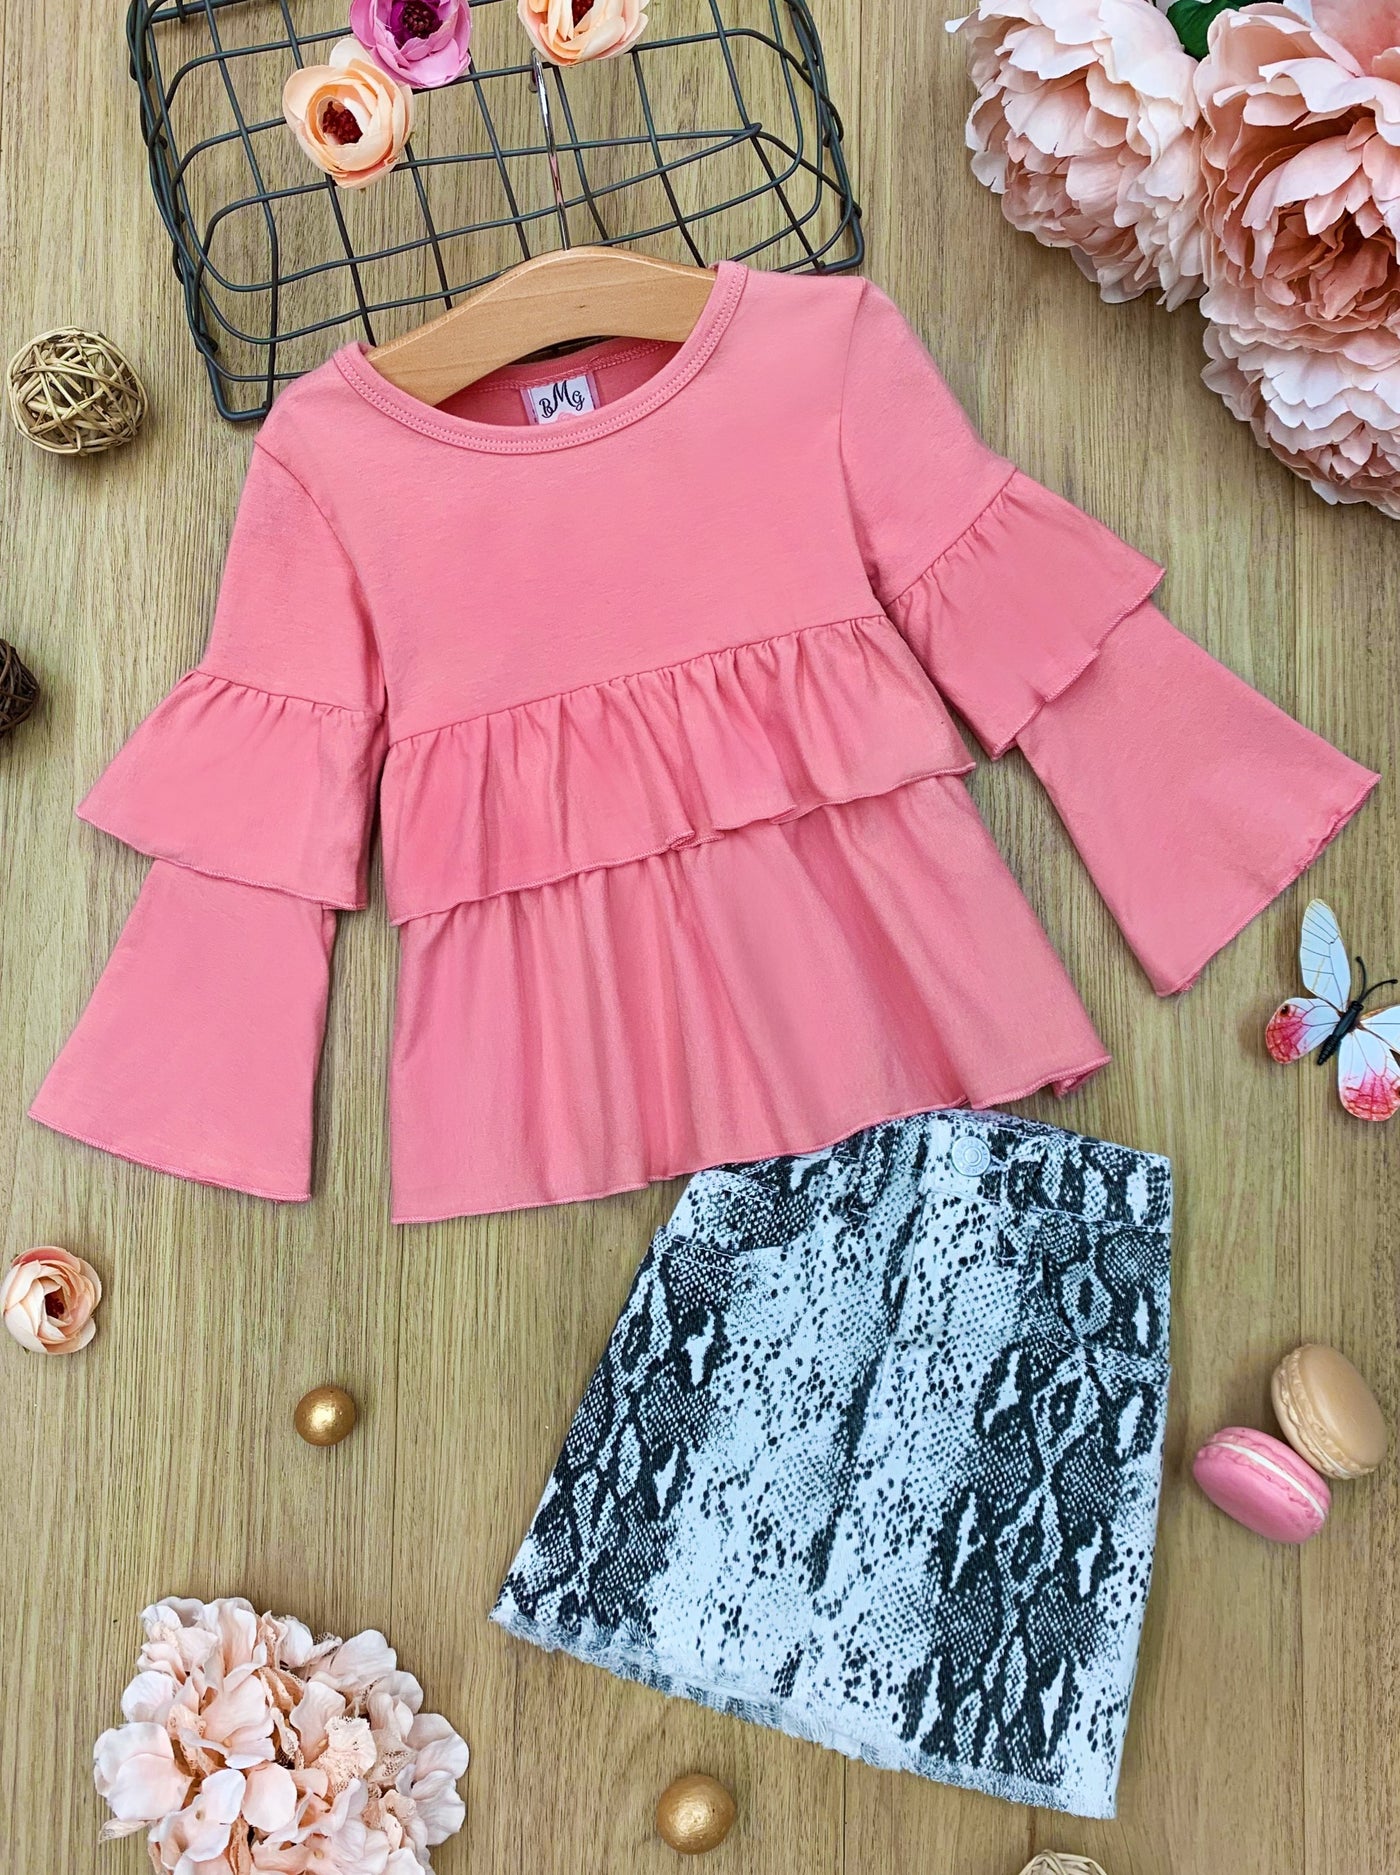 Toddler Spring Outfits | Girls Pink Ruffle Top & Snake Print Skirt Set